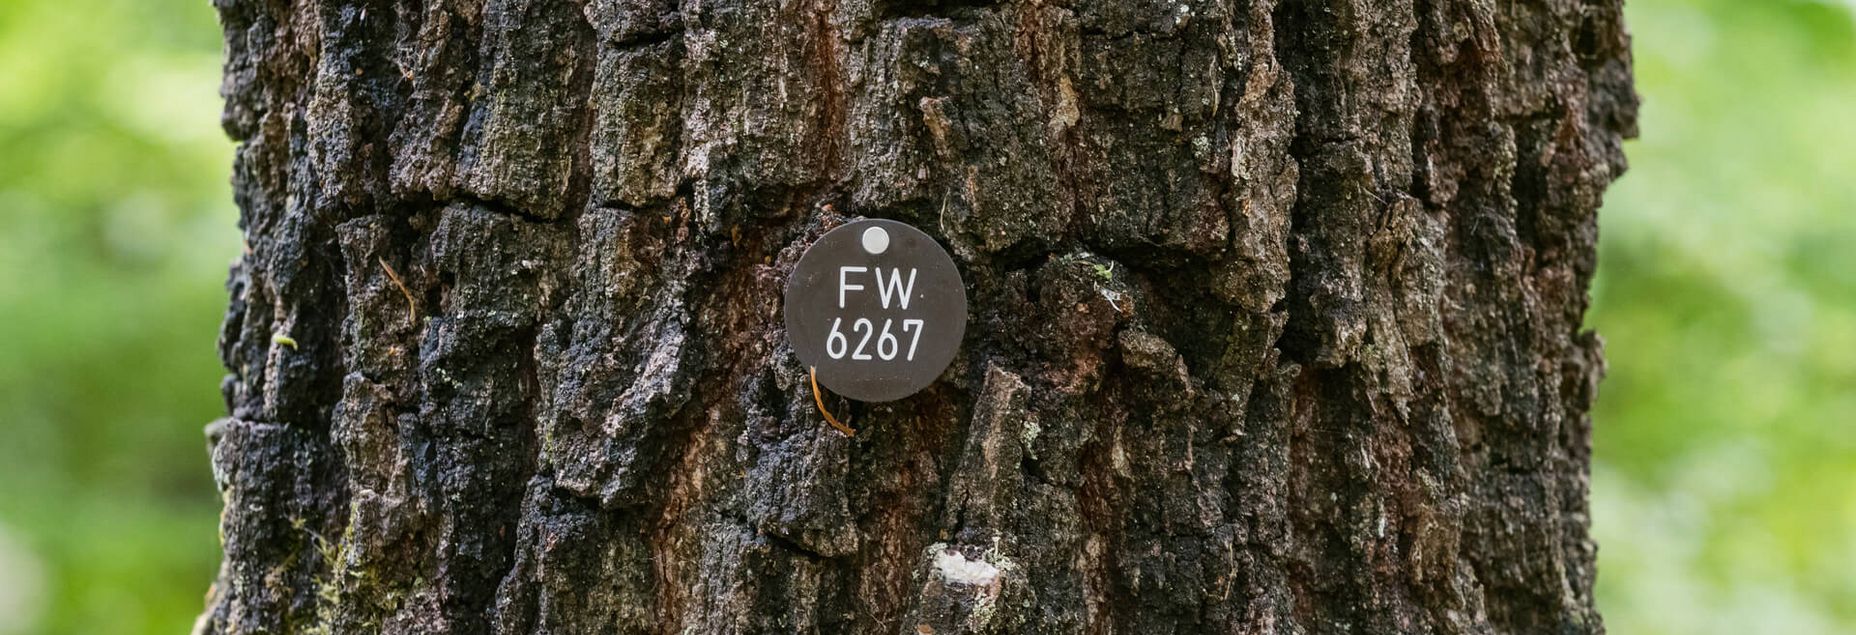 Baum FW 6267 - Plakette